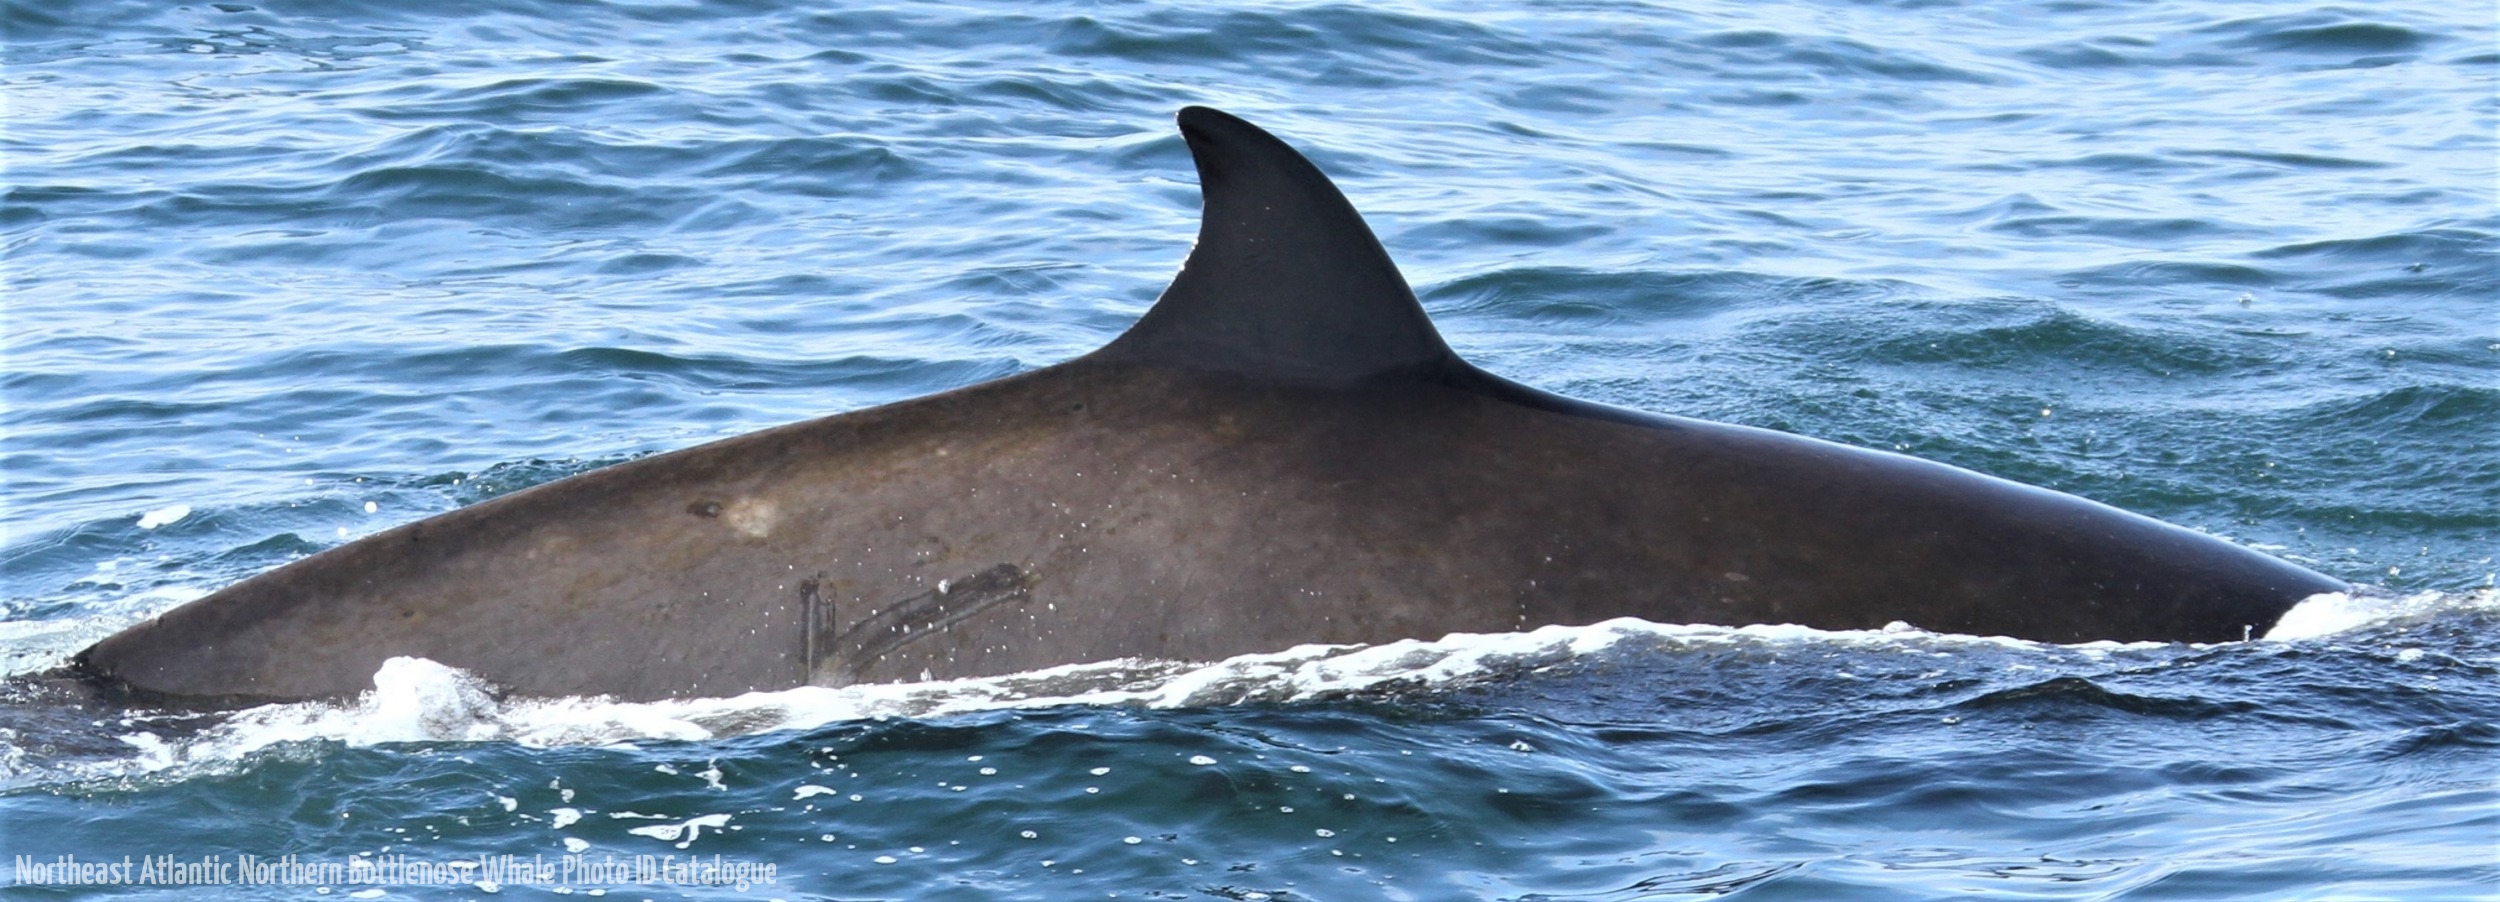 Whale ID: 0262,  Date taken: 24-06-2013,  Photographer: Paul H. Ensor